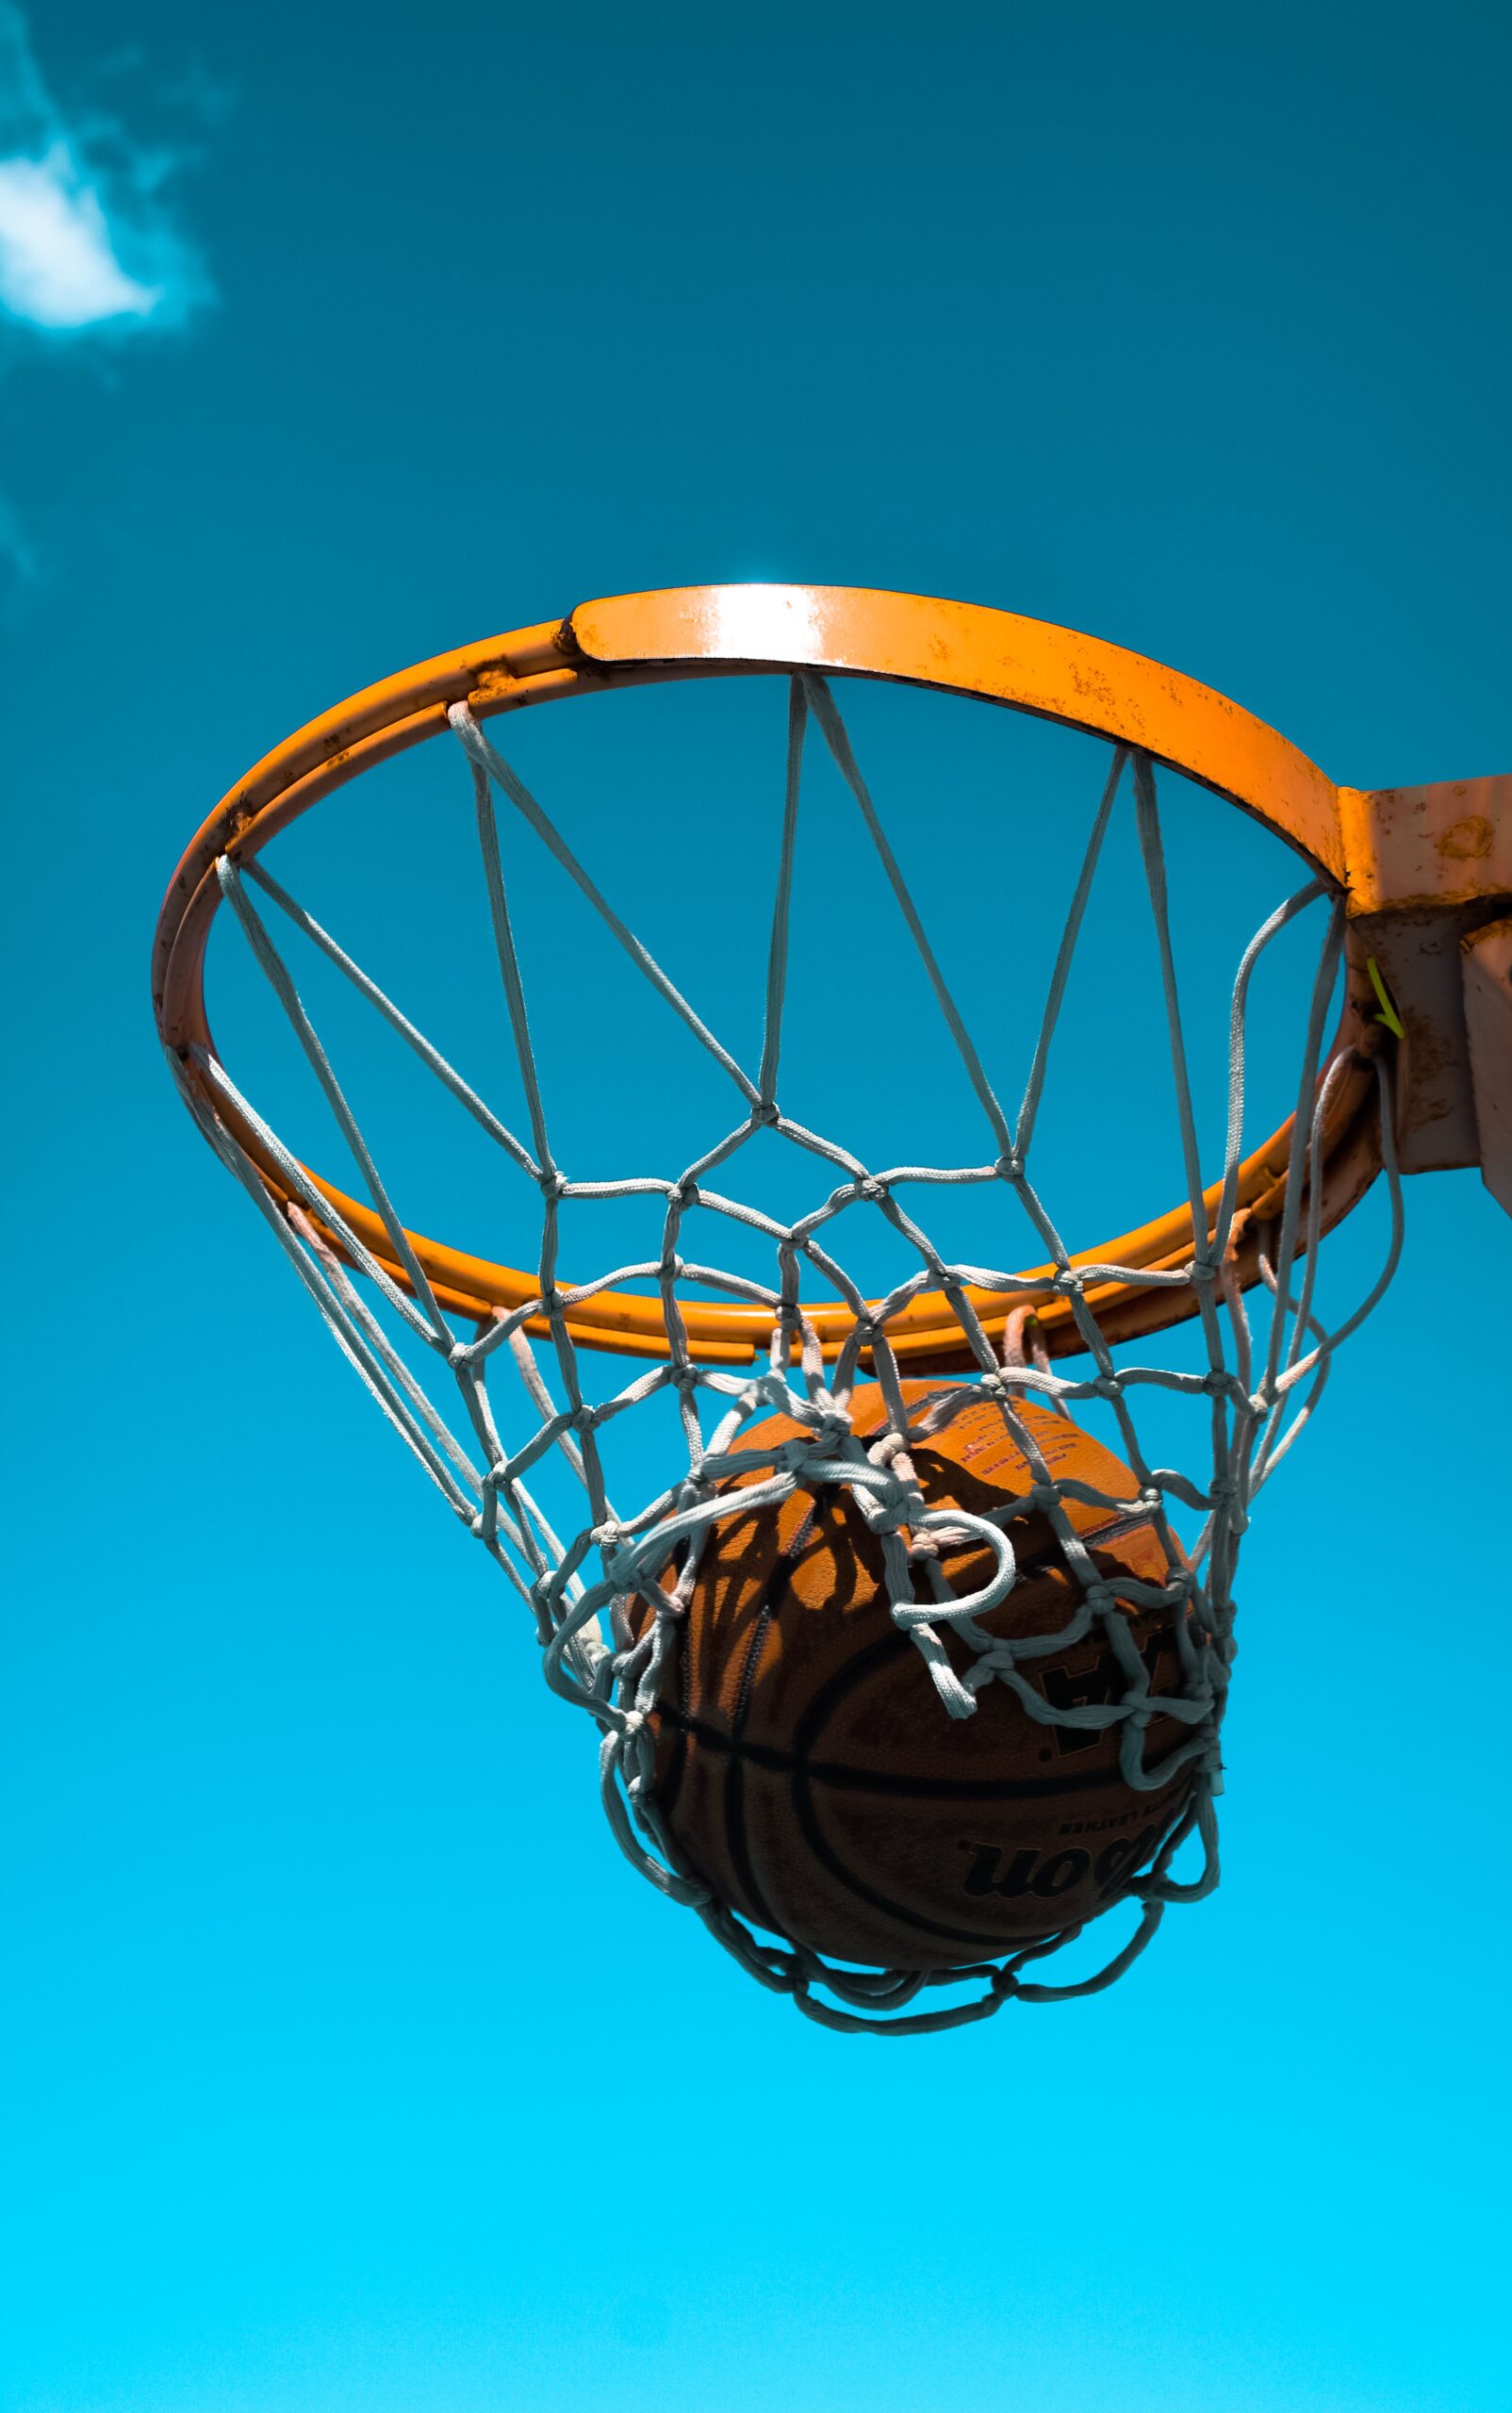 Popular basketball websites to follow